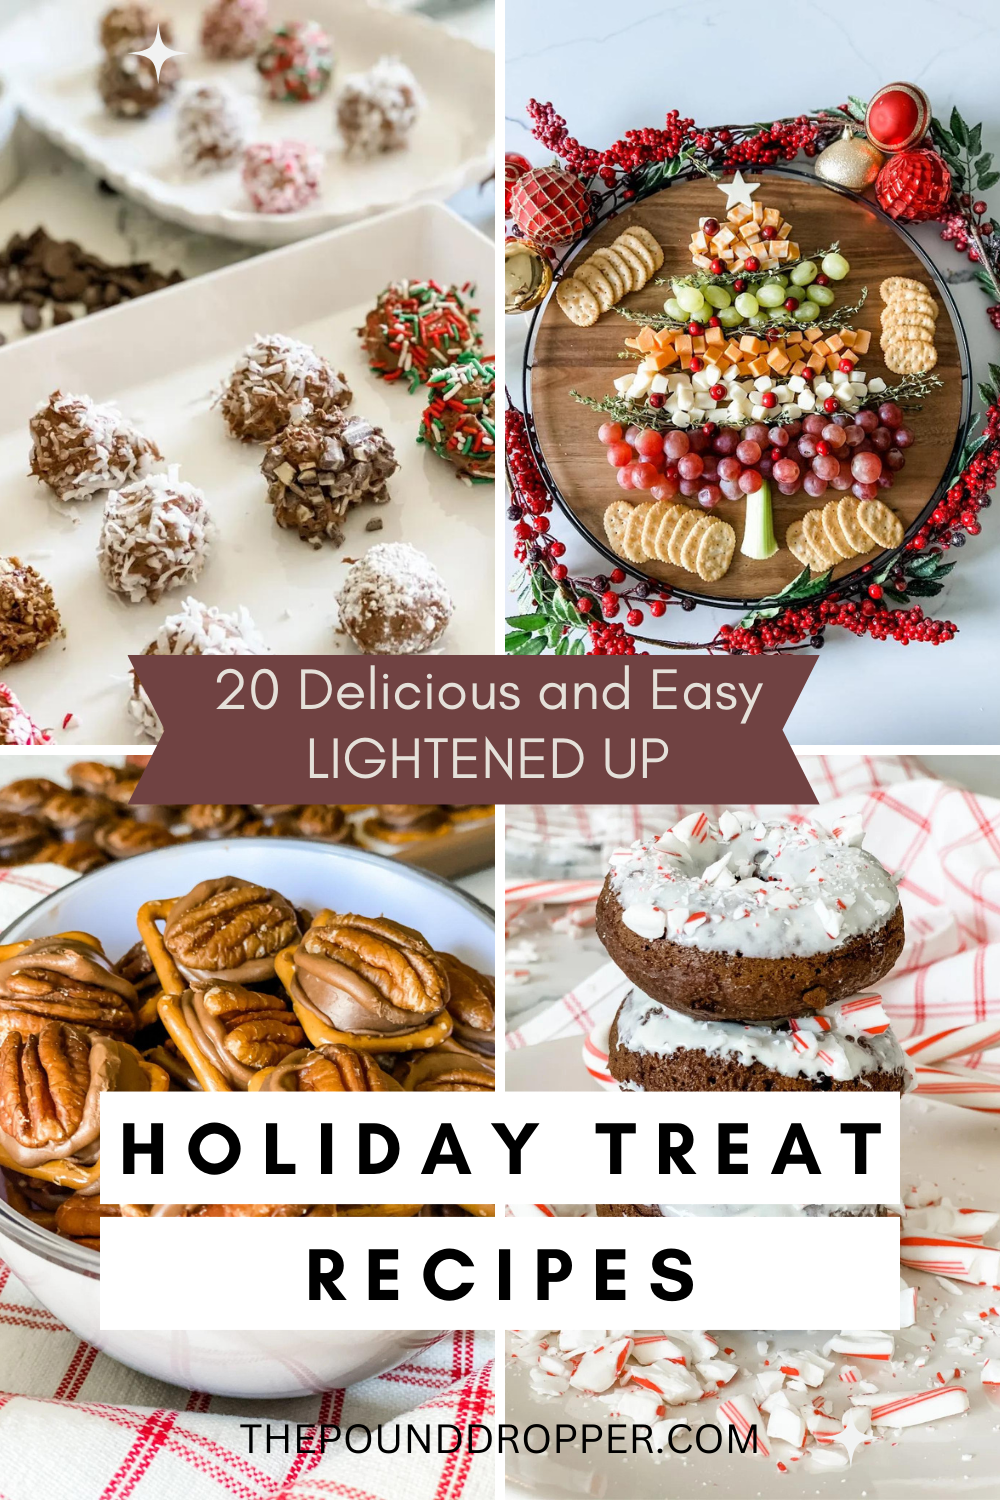 20 Lightened Up Holiday Treat Recipes via @pounddropper